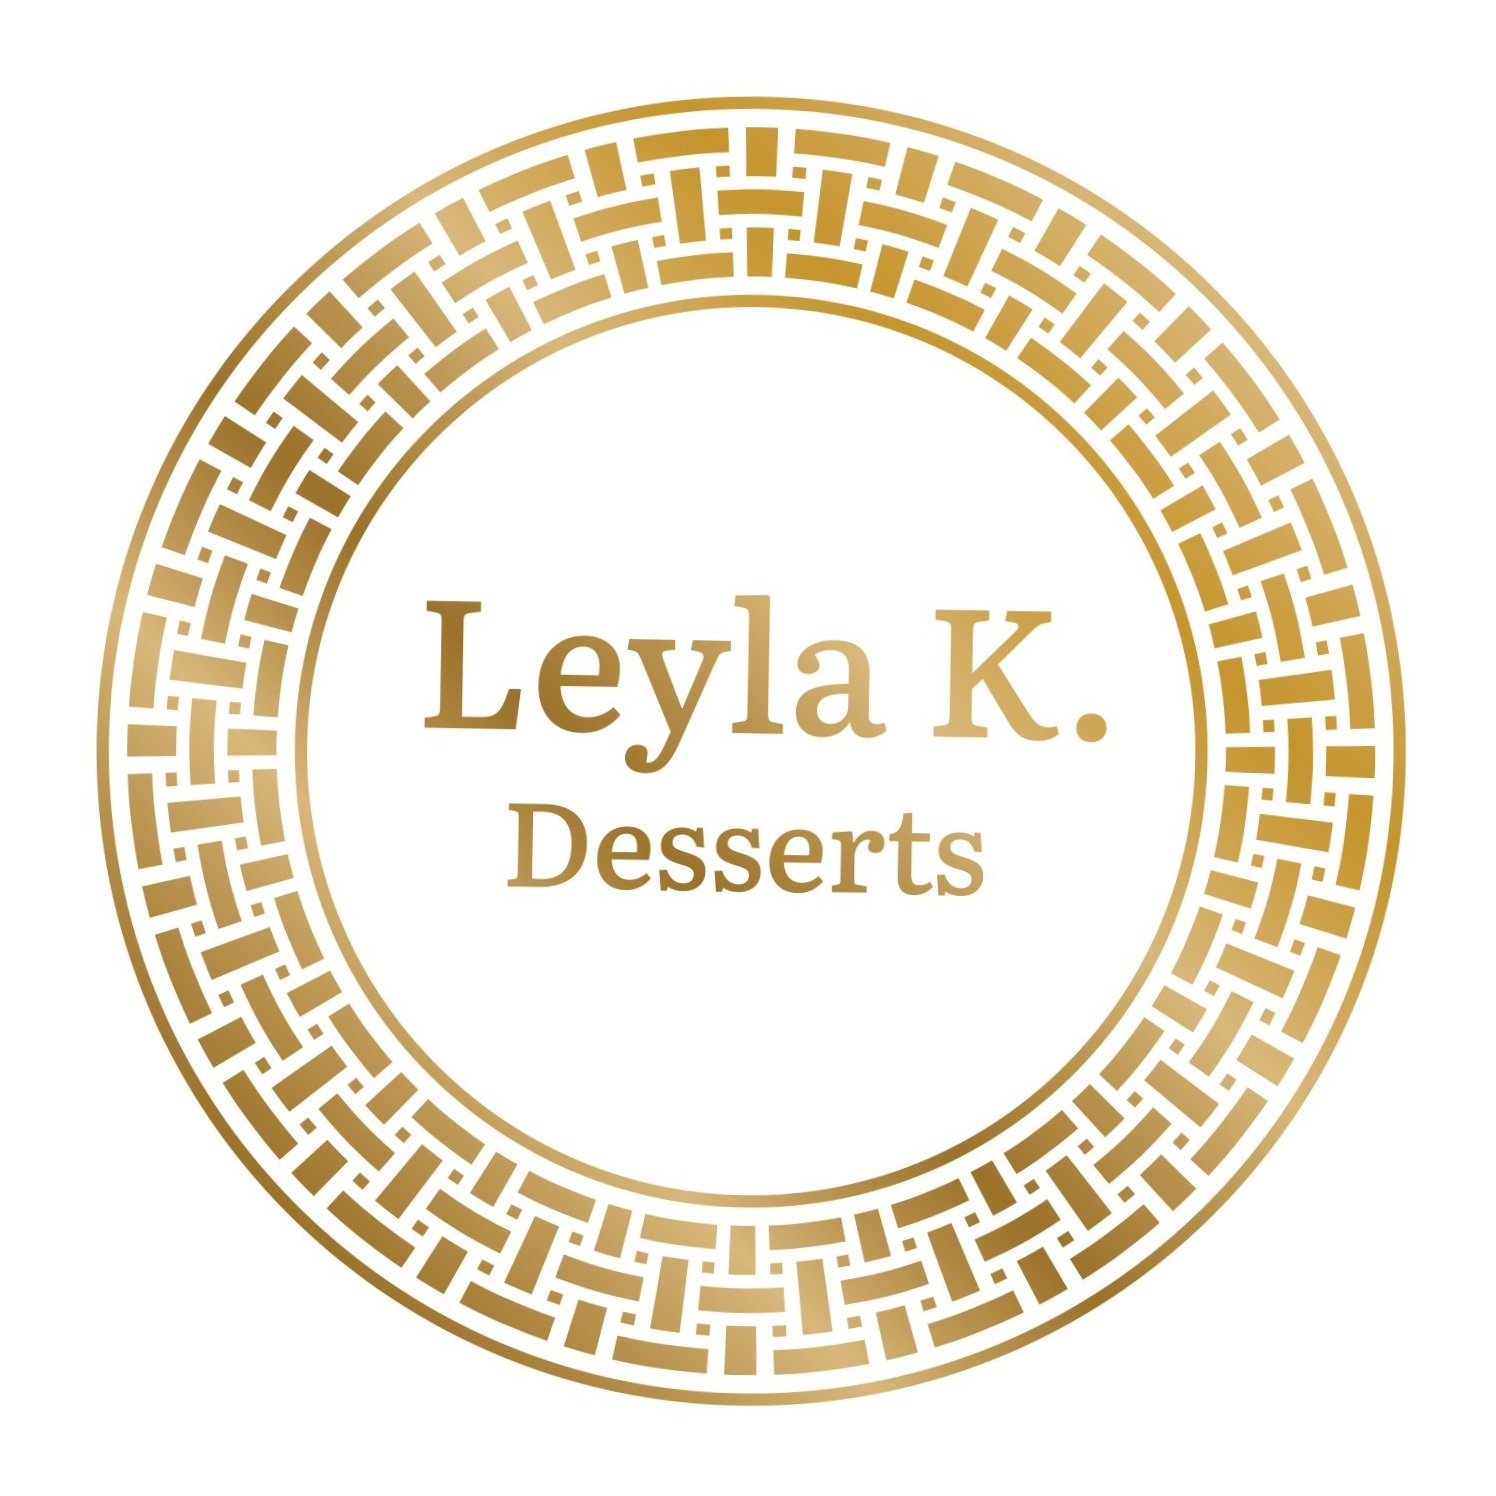 Leyla K. Desserts